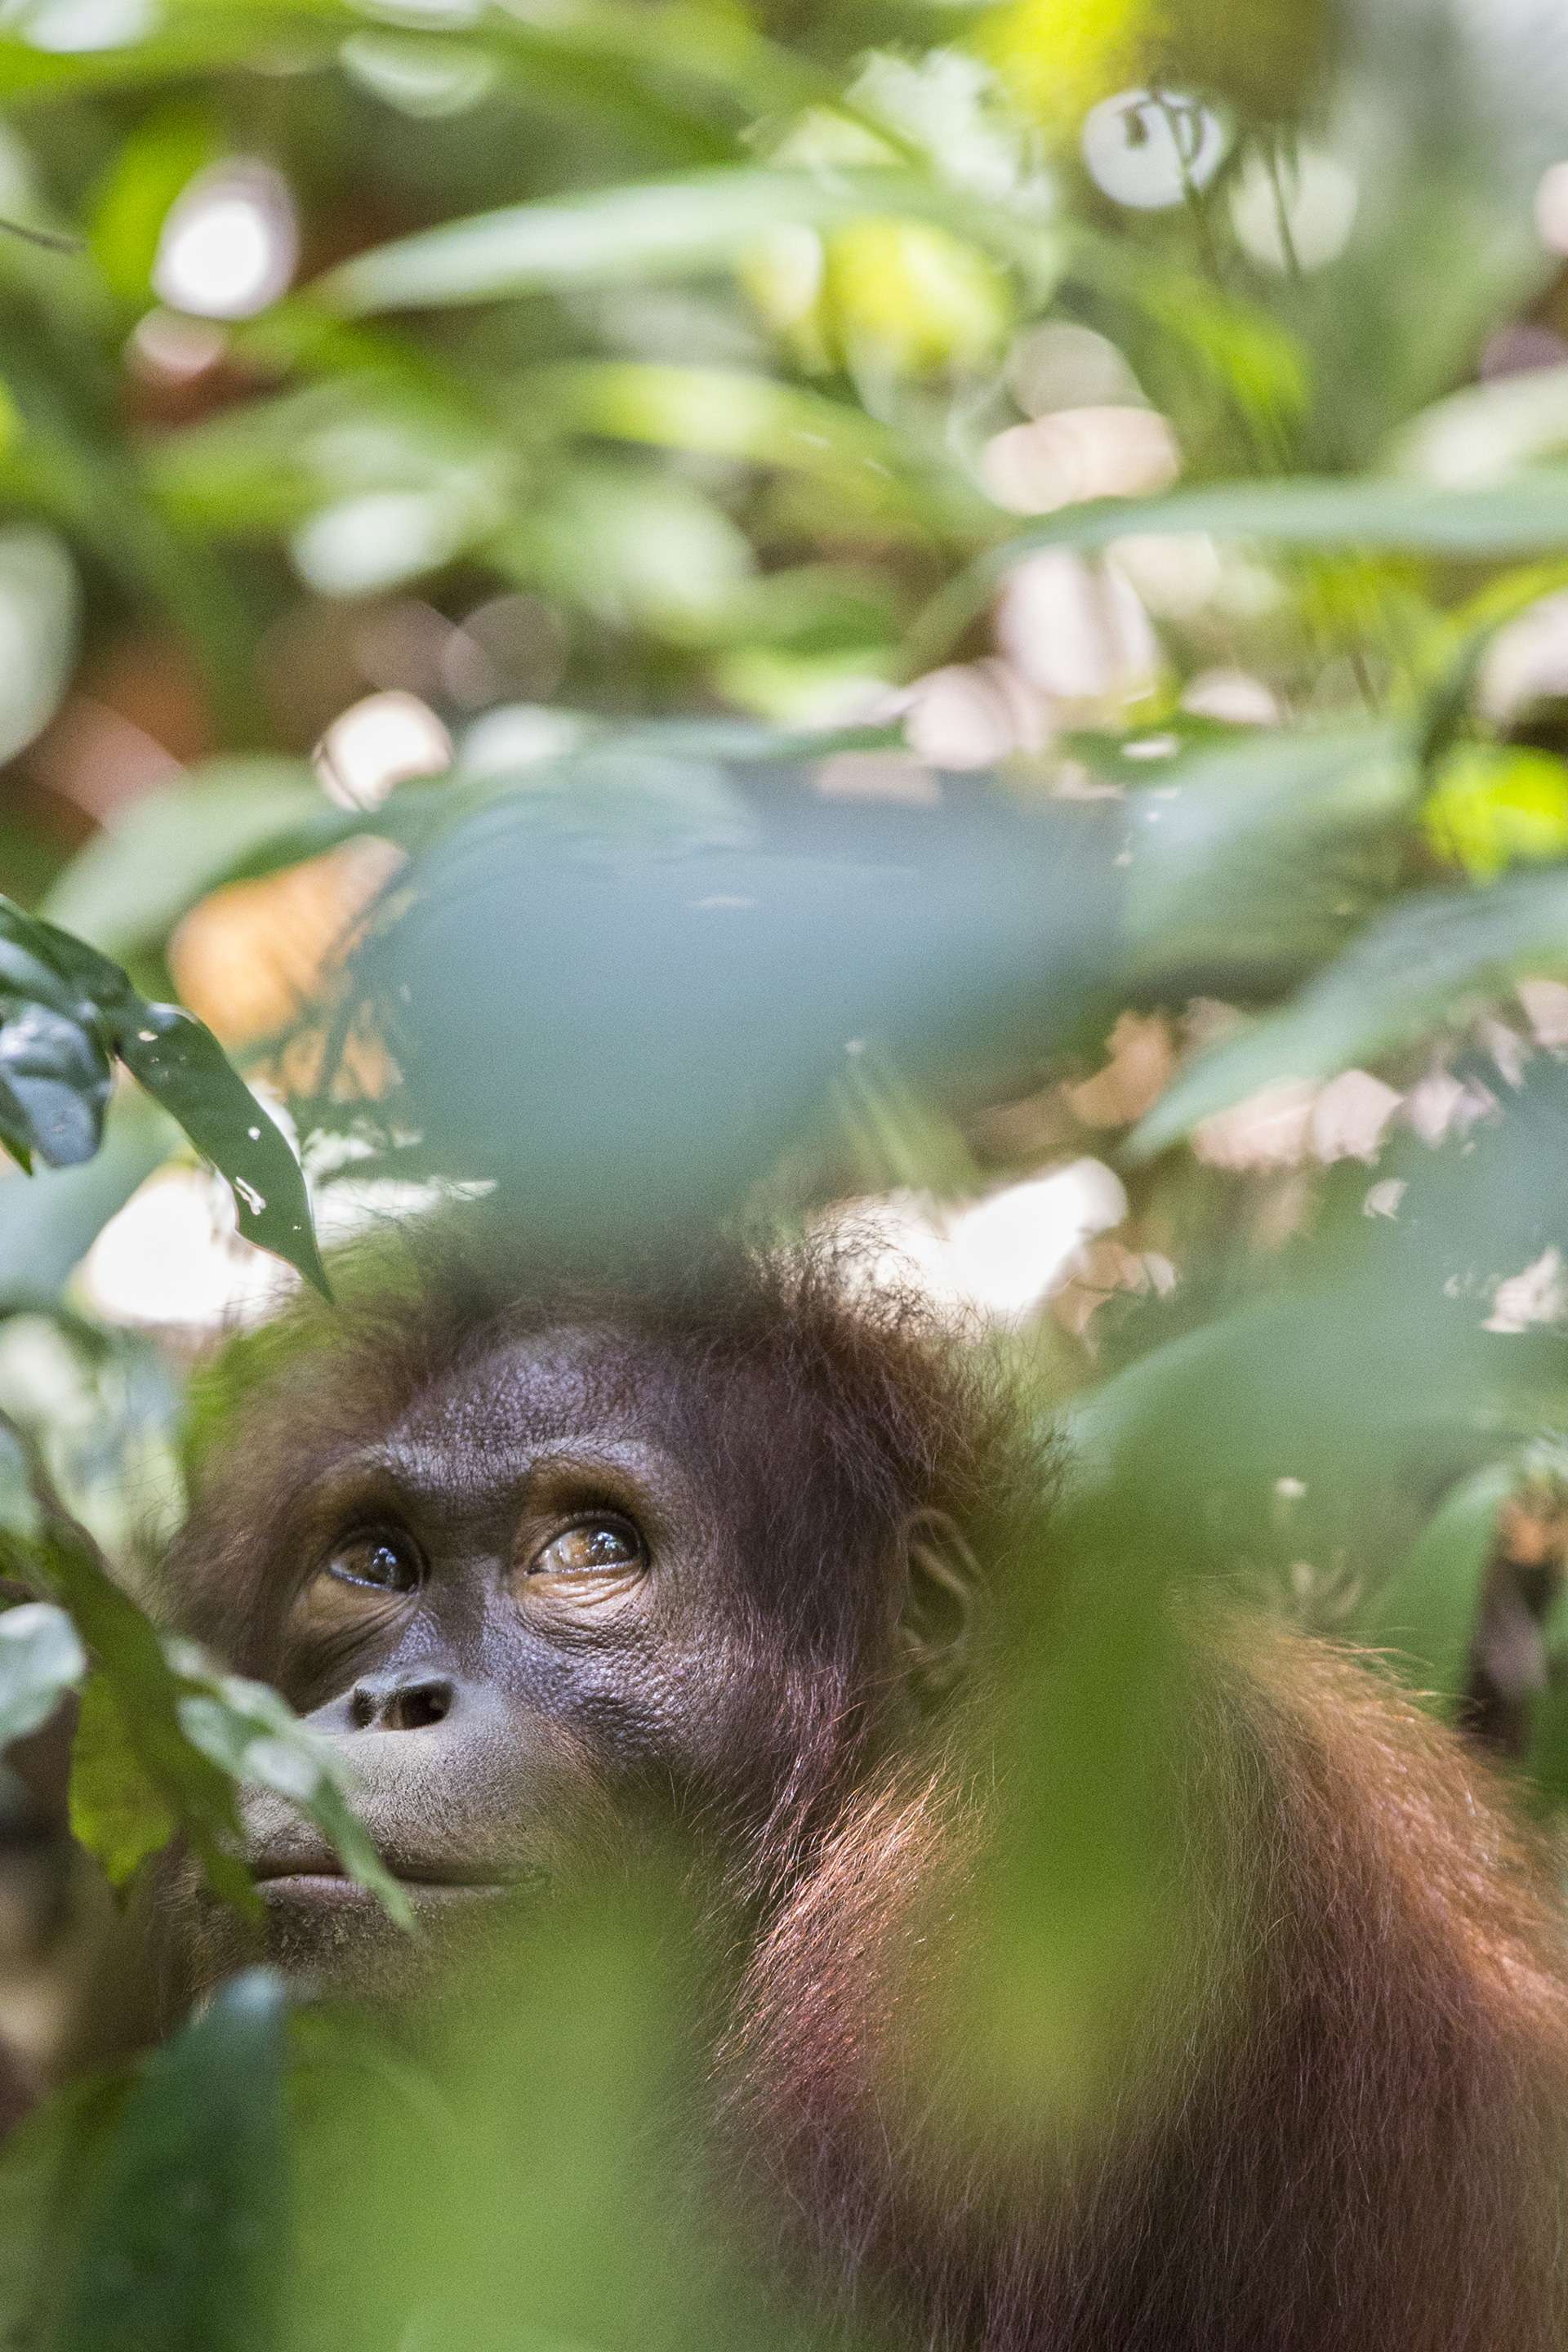 Gilles Martin's photograph of an orangutan from Borneo